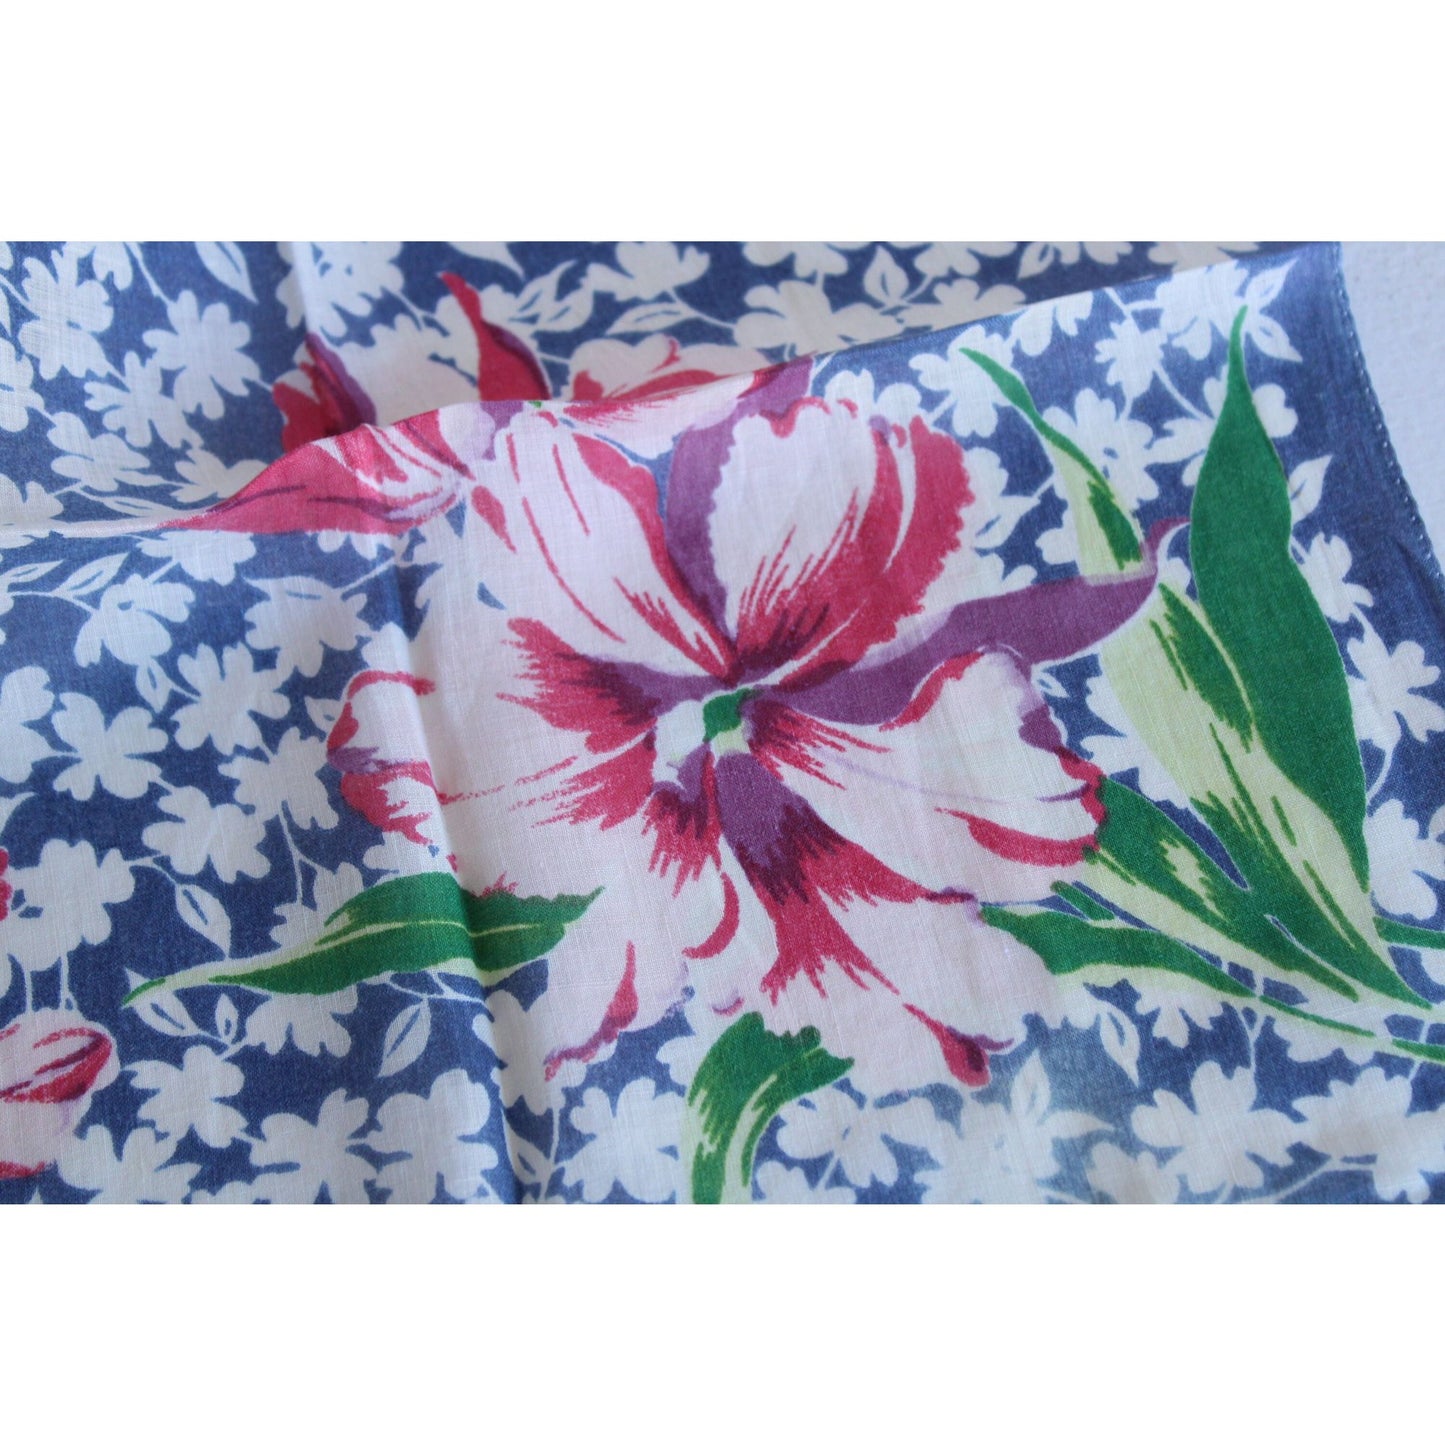 Vintage 1940s Iris Flower Print Cotton Hankie